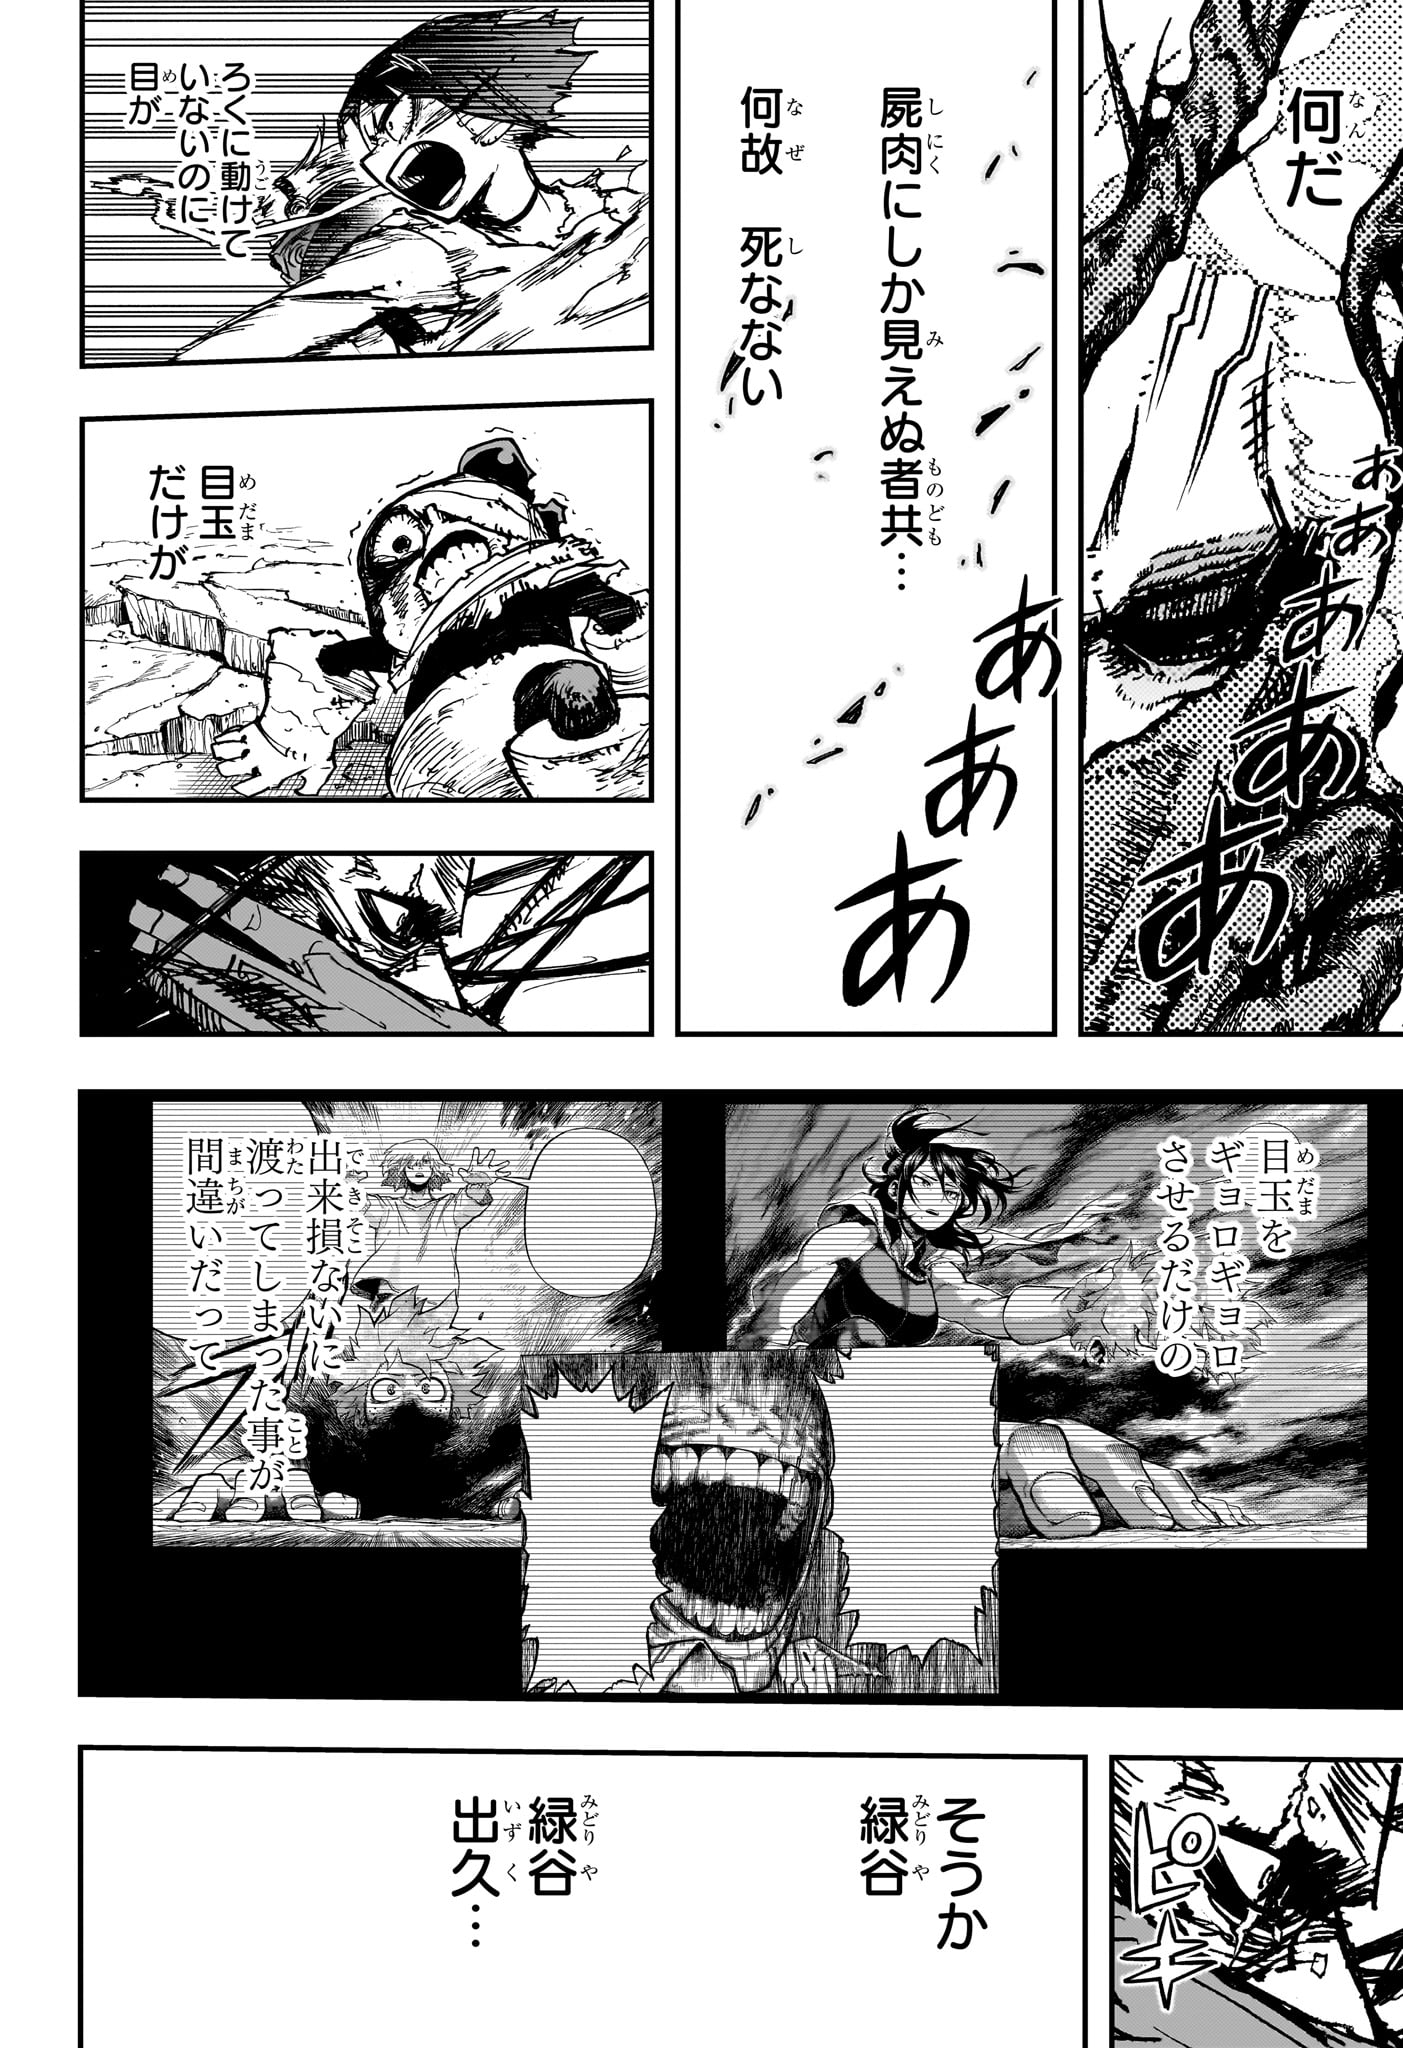 Boku no Hero Academia - Chapter 422 - Page 8